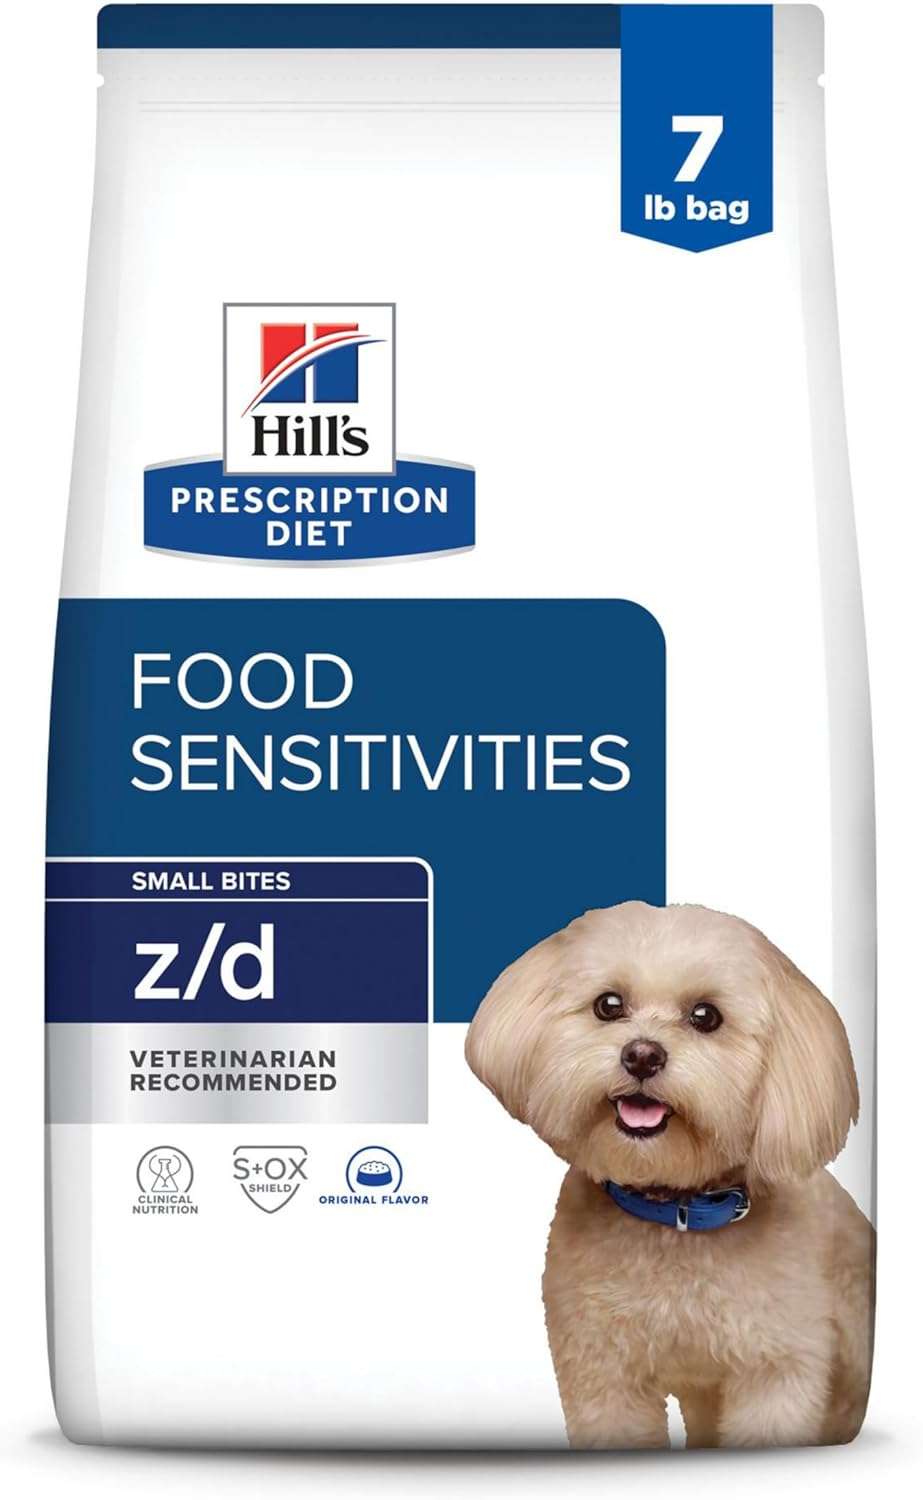 Hill's Prescription Diet z d Small Bites Dog Food 7 lb Bag